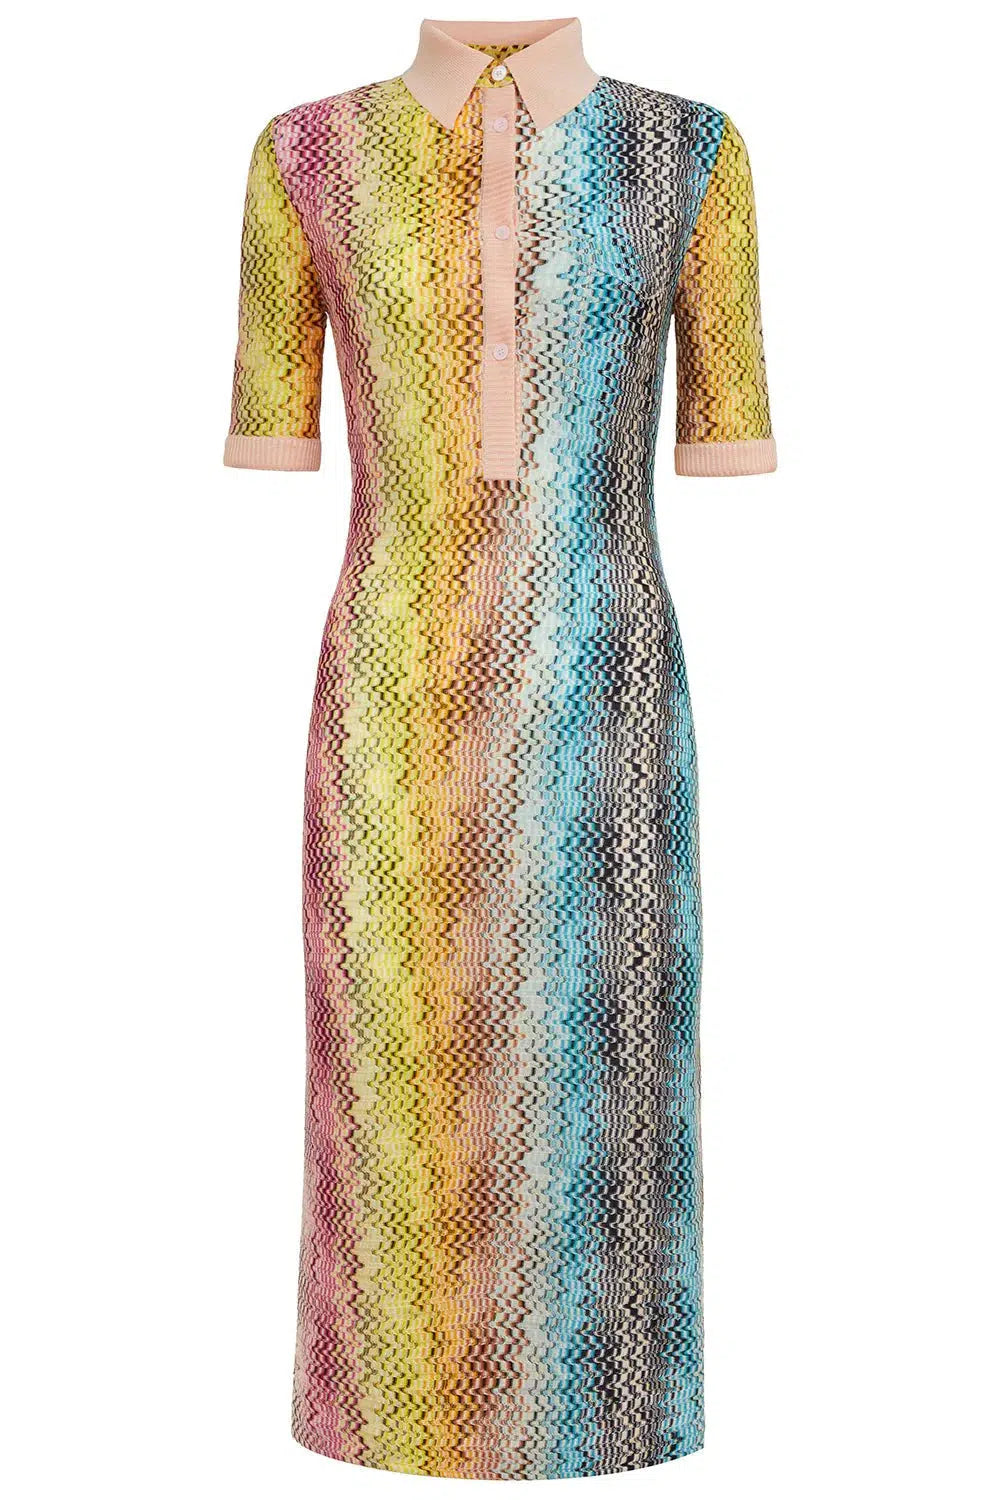 Collared Vertical Short Sleeve Midi dress-Dress-Missoni-Debs Boutique